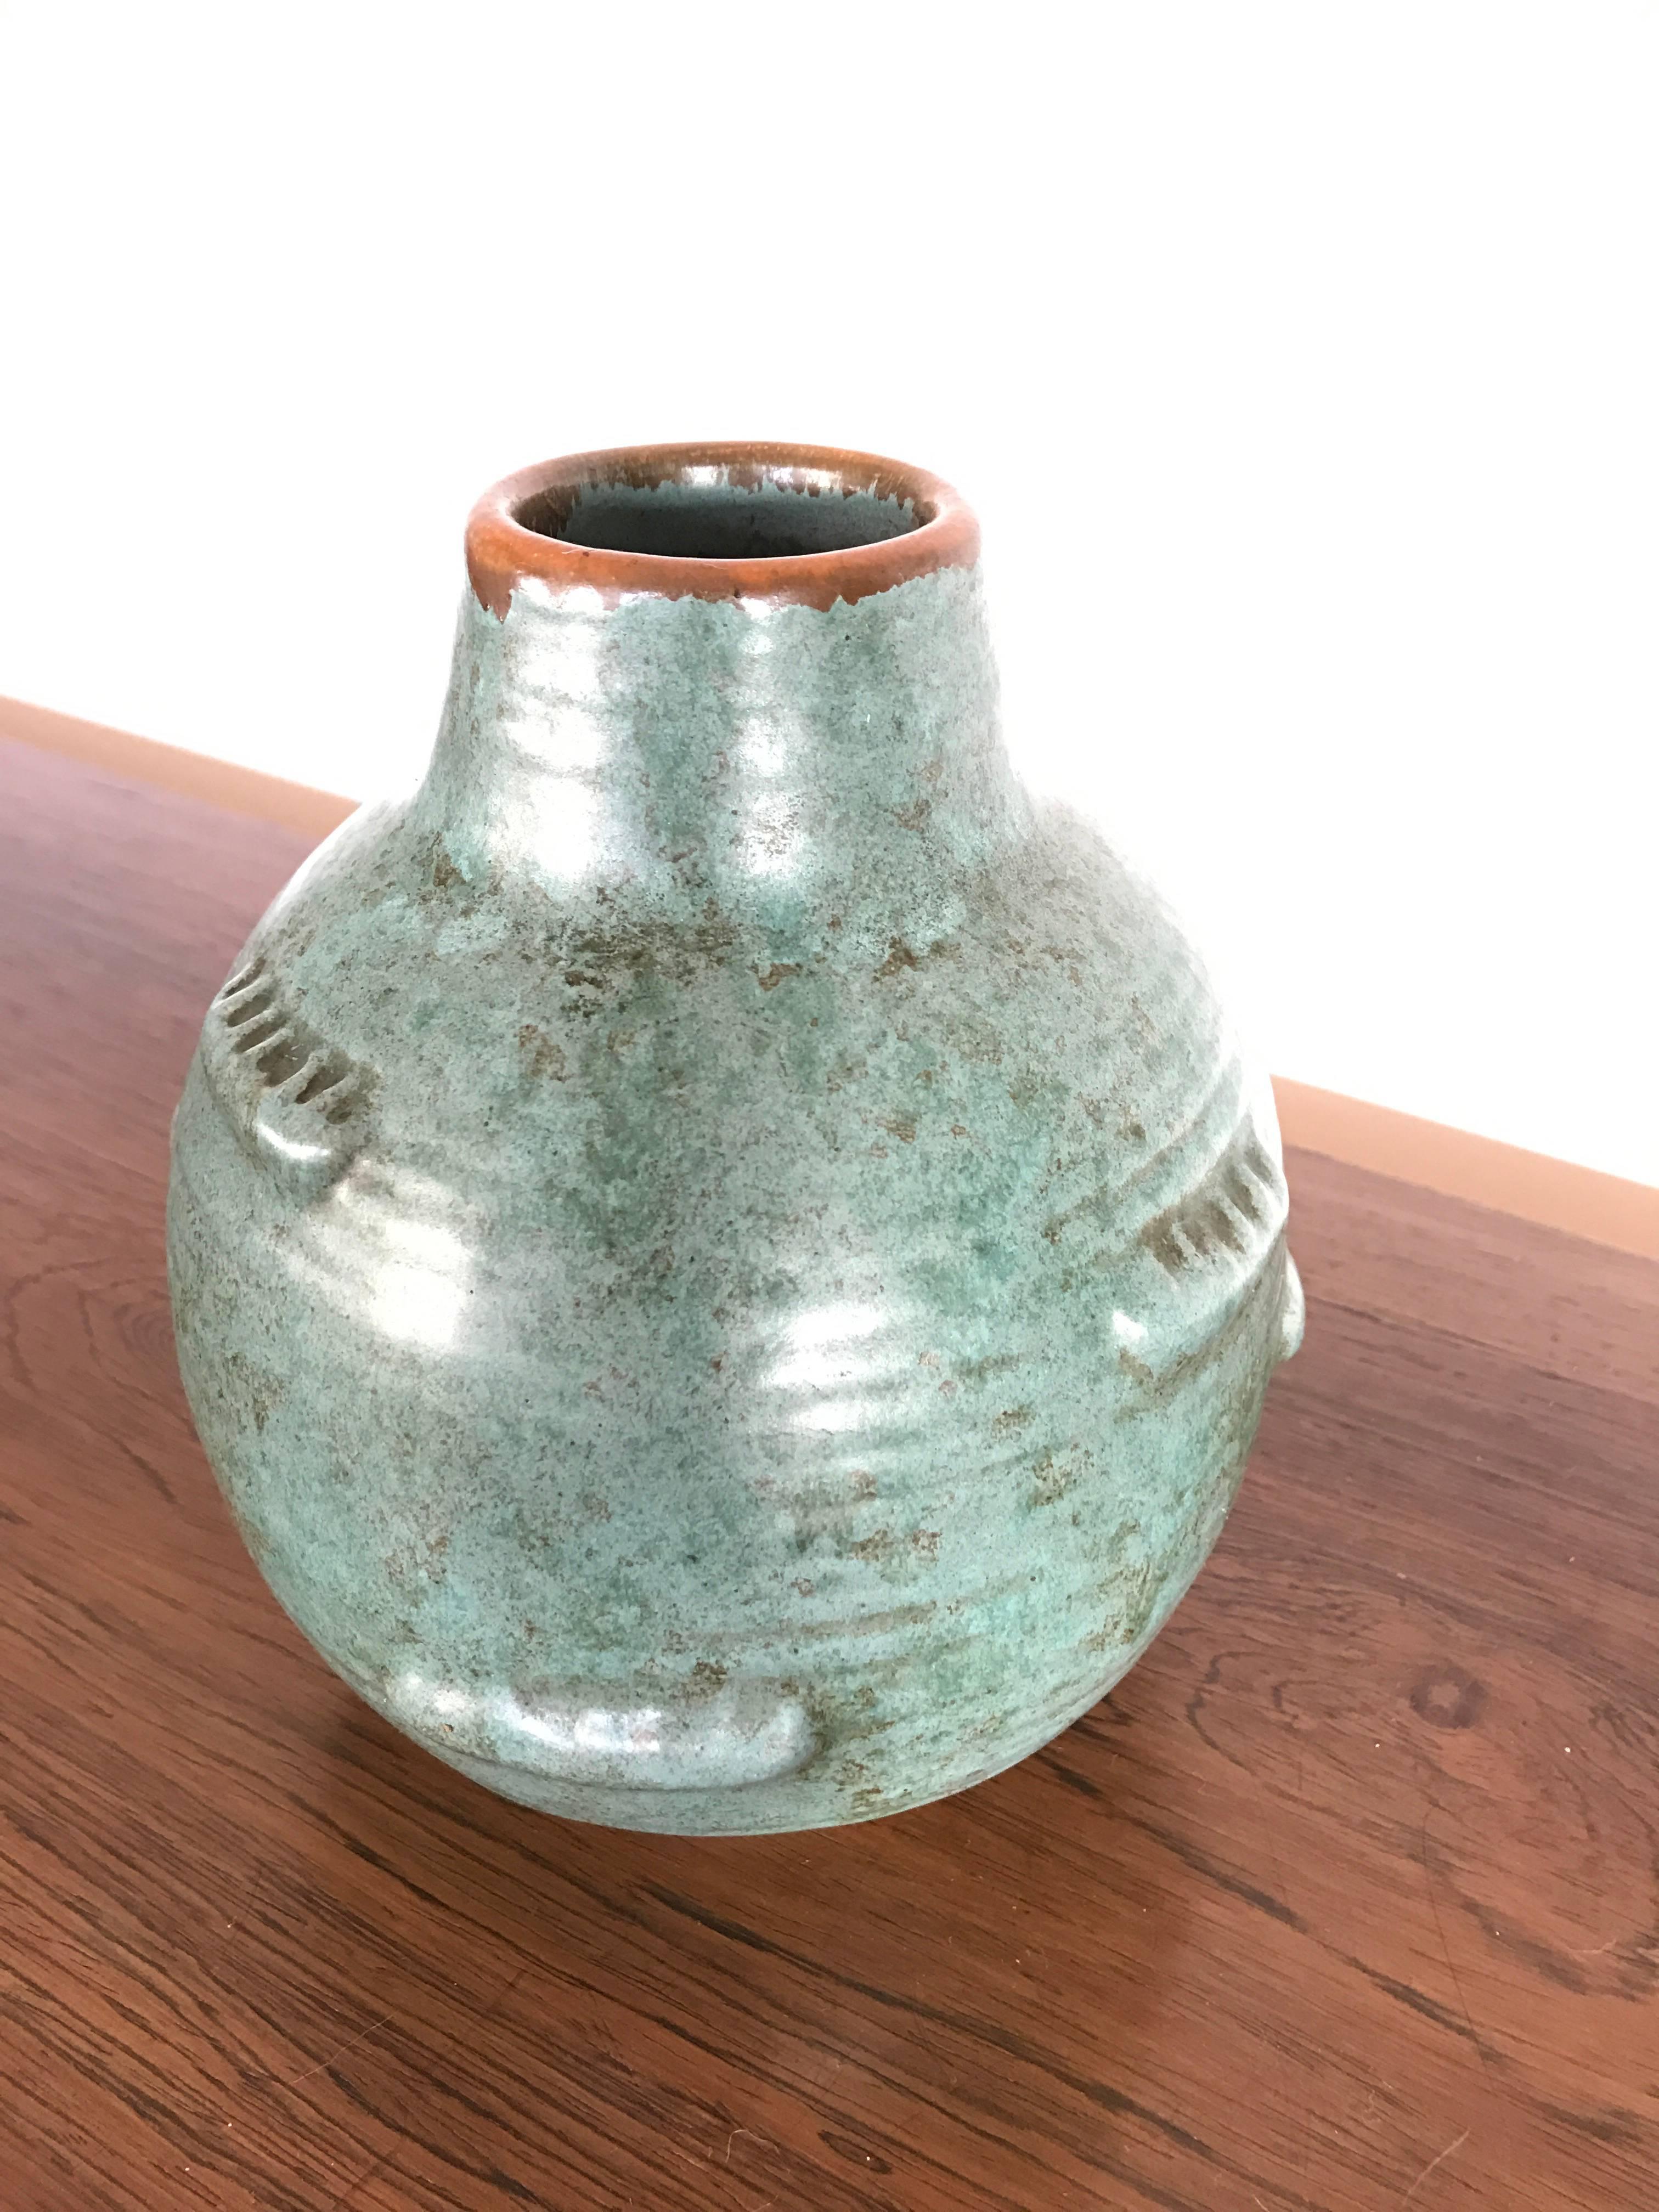 Danish Michael Andersen Stoneware Vase with Green Glaze, 1930s from Denmark